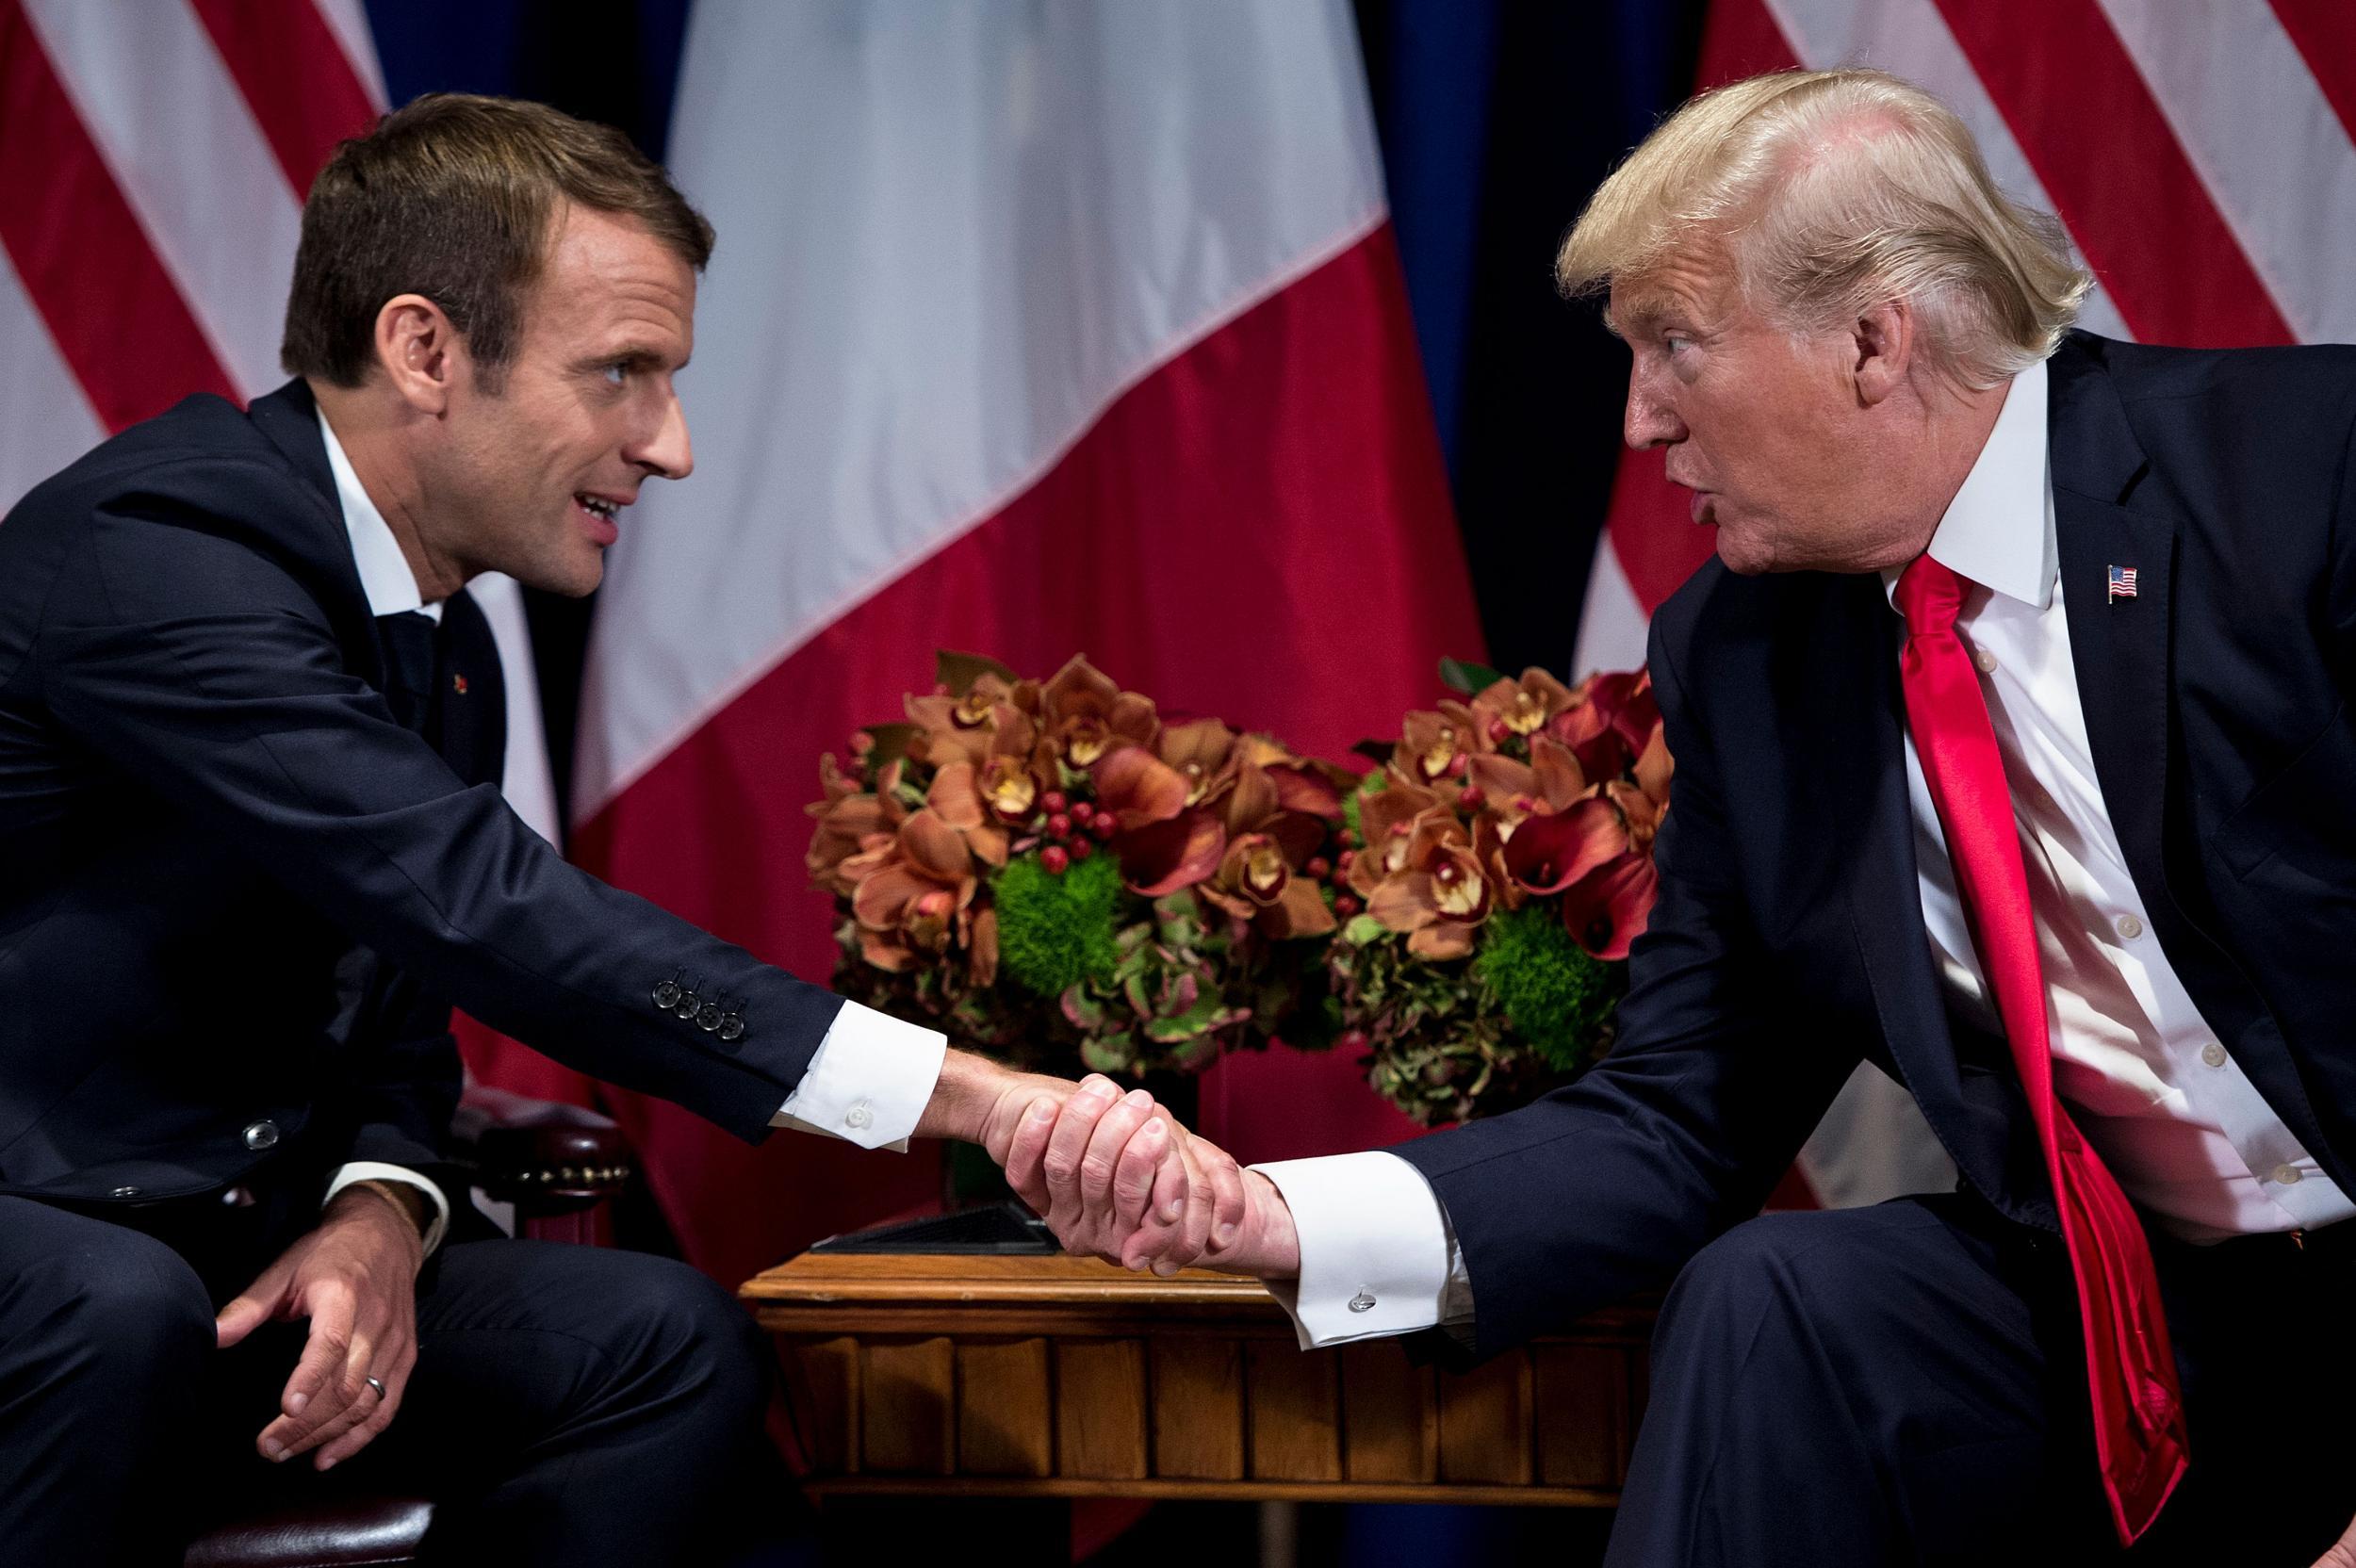 Emmanuel Macron and Donald Trump shake hands at a UN meeting